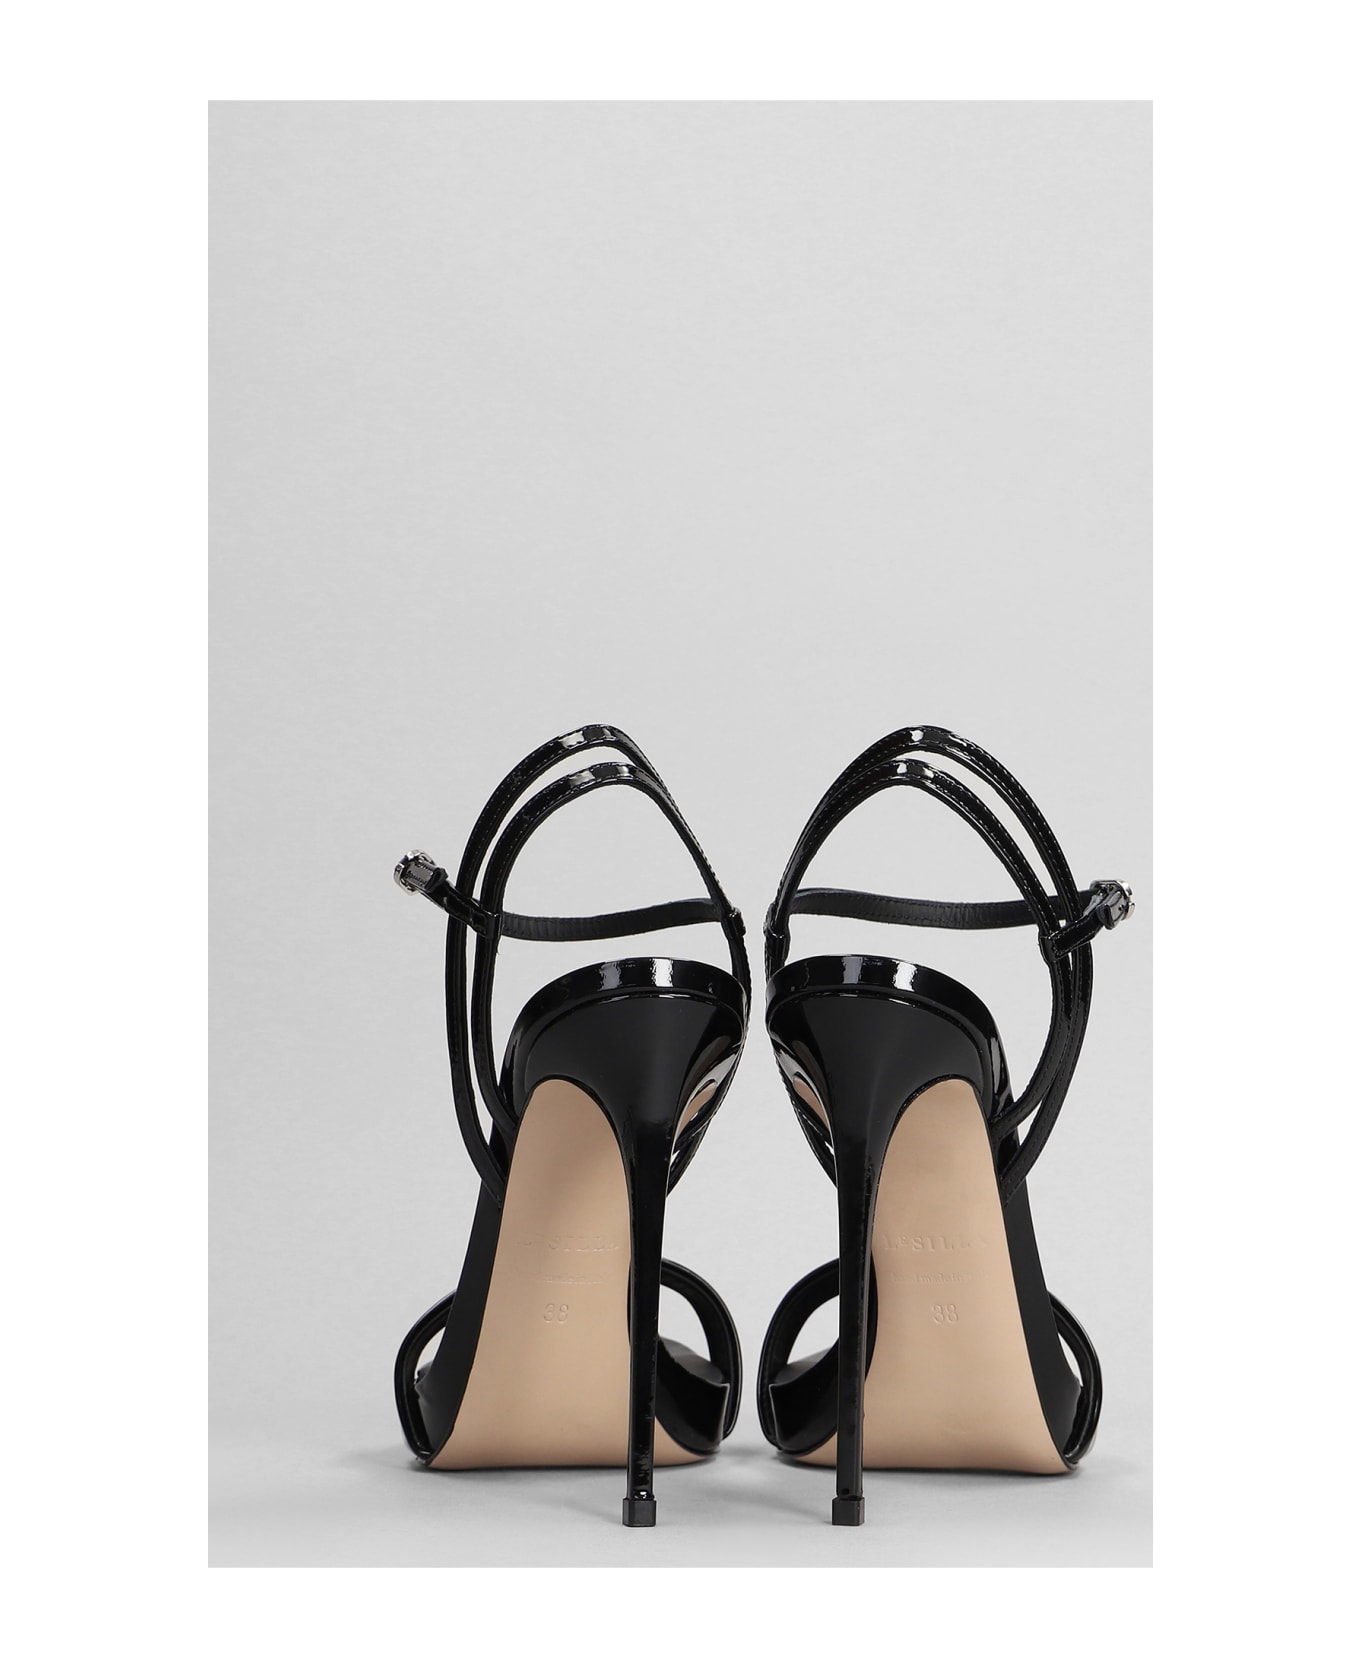 Le Silla Gwen Sandals In Black Patent Leather - black サンダル